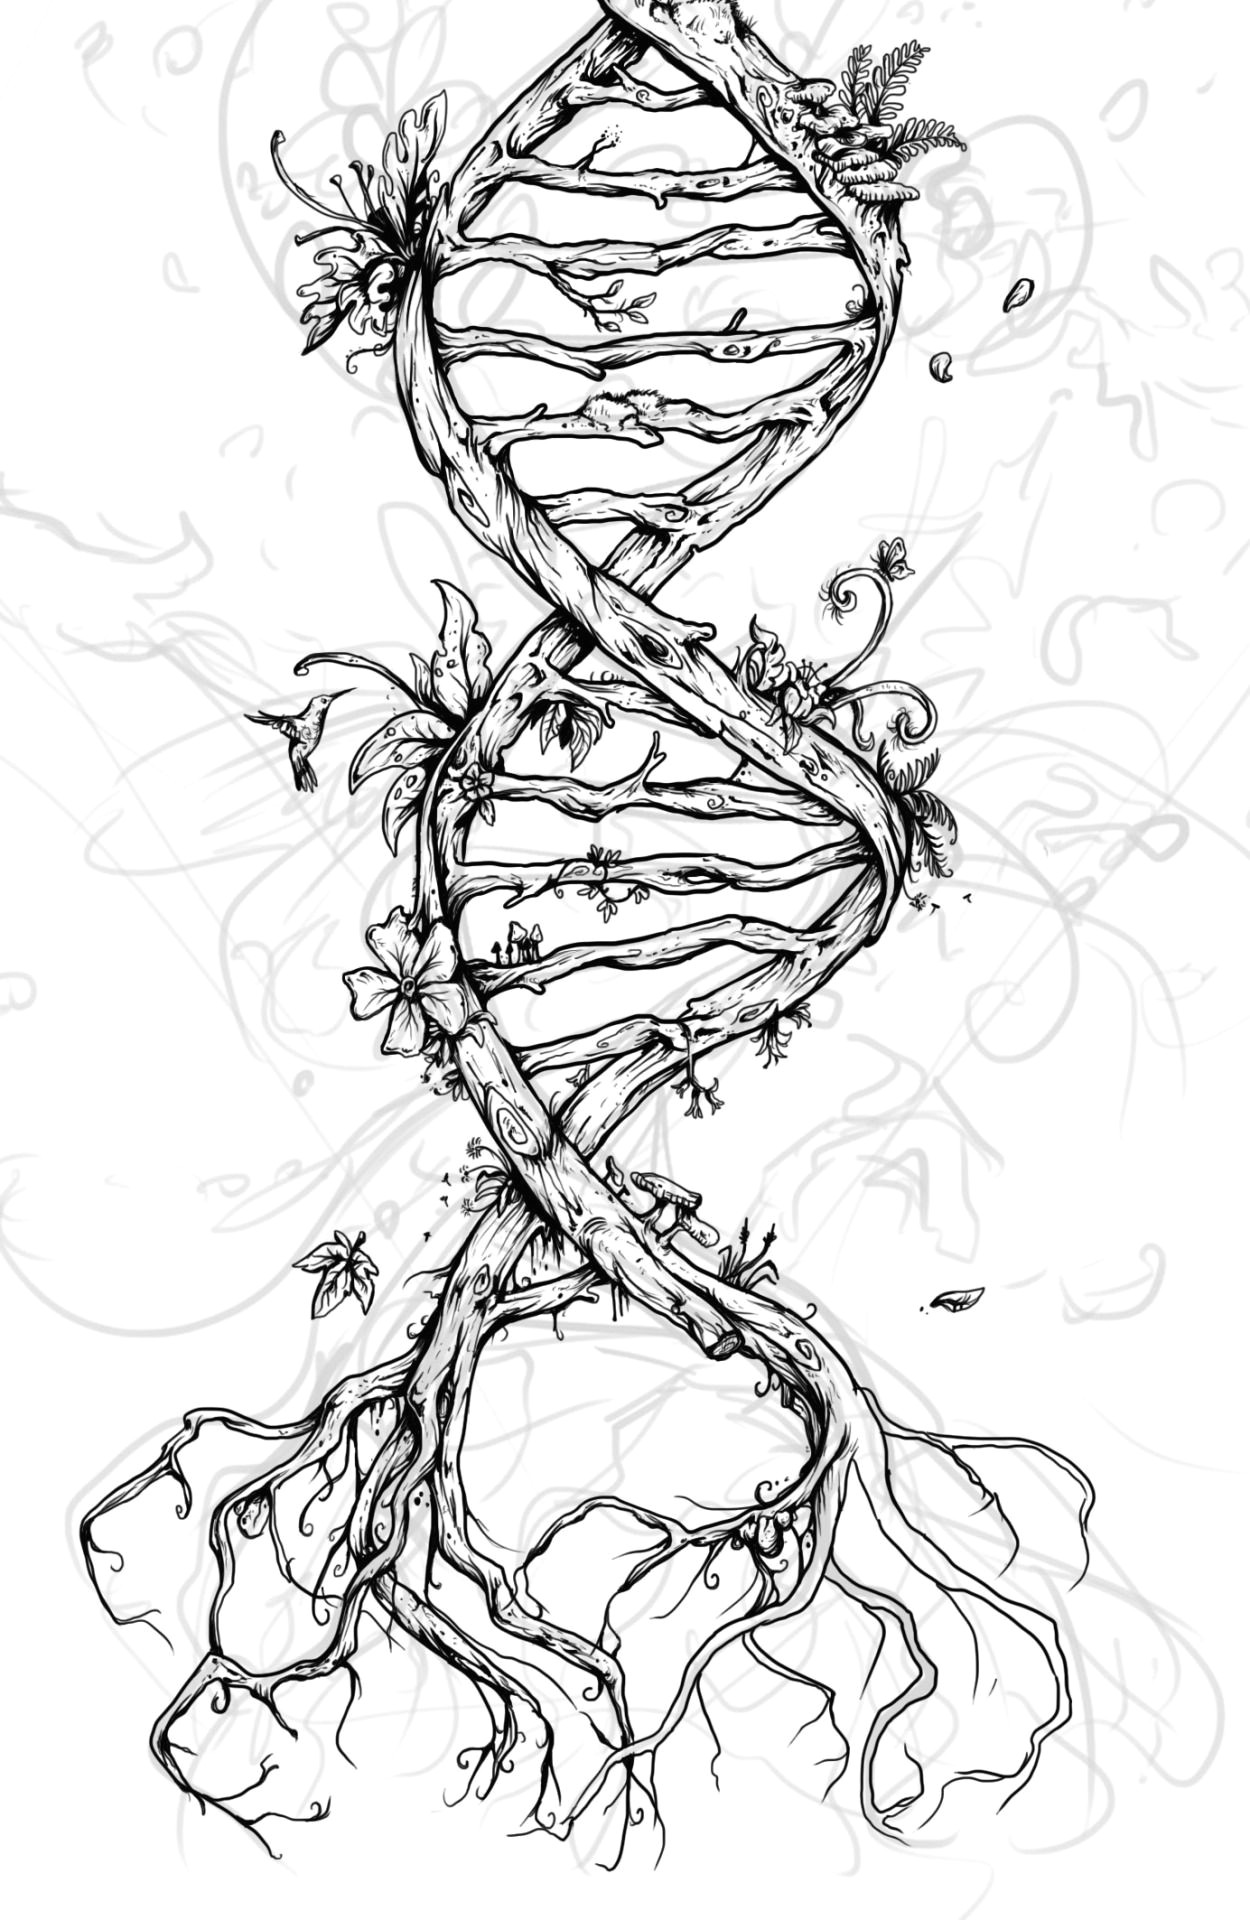 Easy Science Drawings Illustration Art Life Design Nature Biology Wip organic